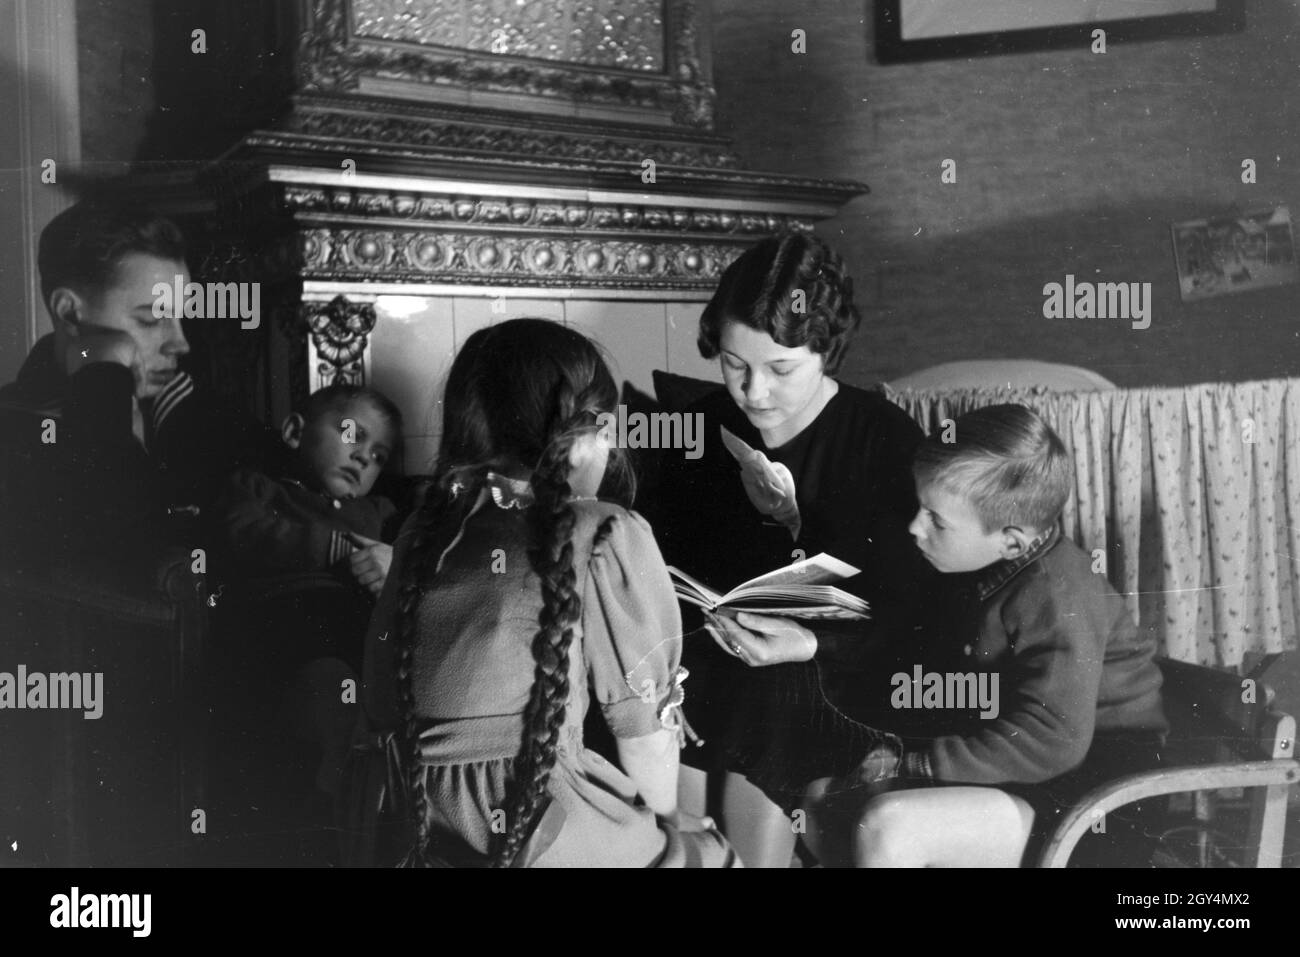 Mitglieder einer kinderreichen Familie lesen gemeinsam ein Buch, Deutsches Reich 1930er Jahre. I membri di una famiglia estesa la lettura di un libro insieme, Germania 1930s. Foto Stock